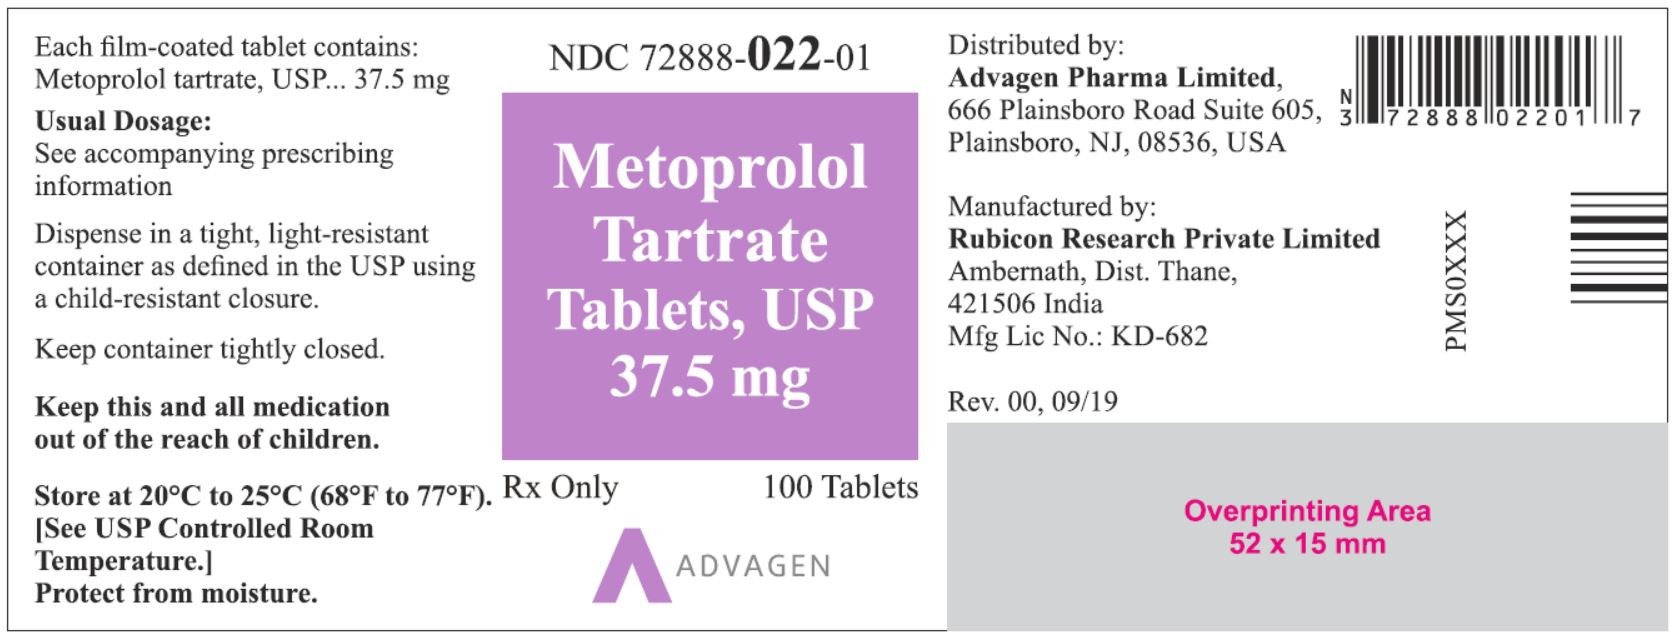 NDC 72888-022-01 - Metoprolol Tartrate Tablets, USP 37.5 mg - 100 Tablets